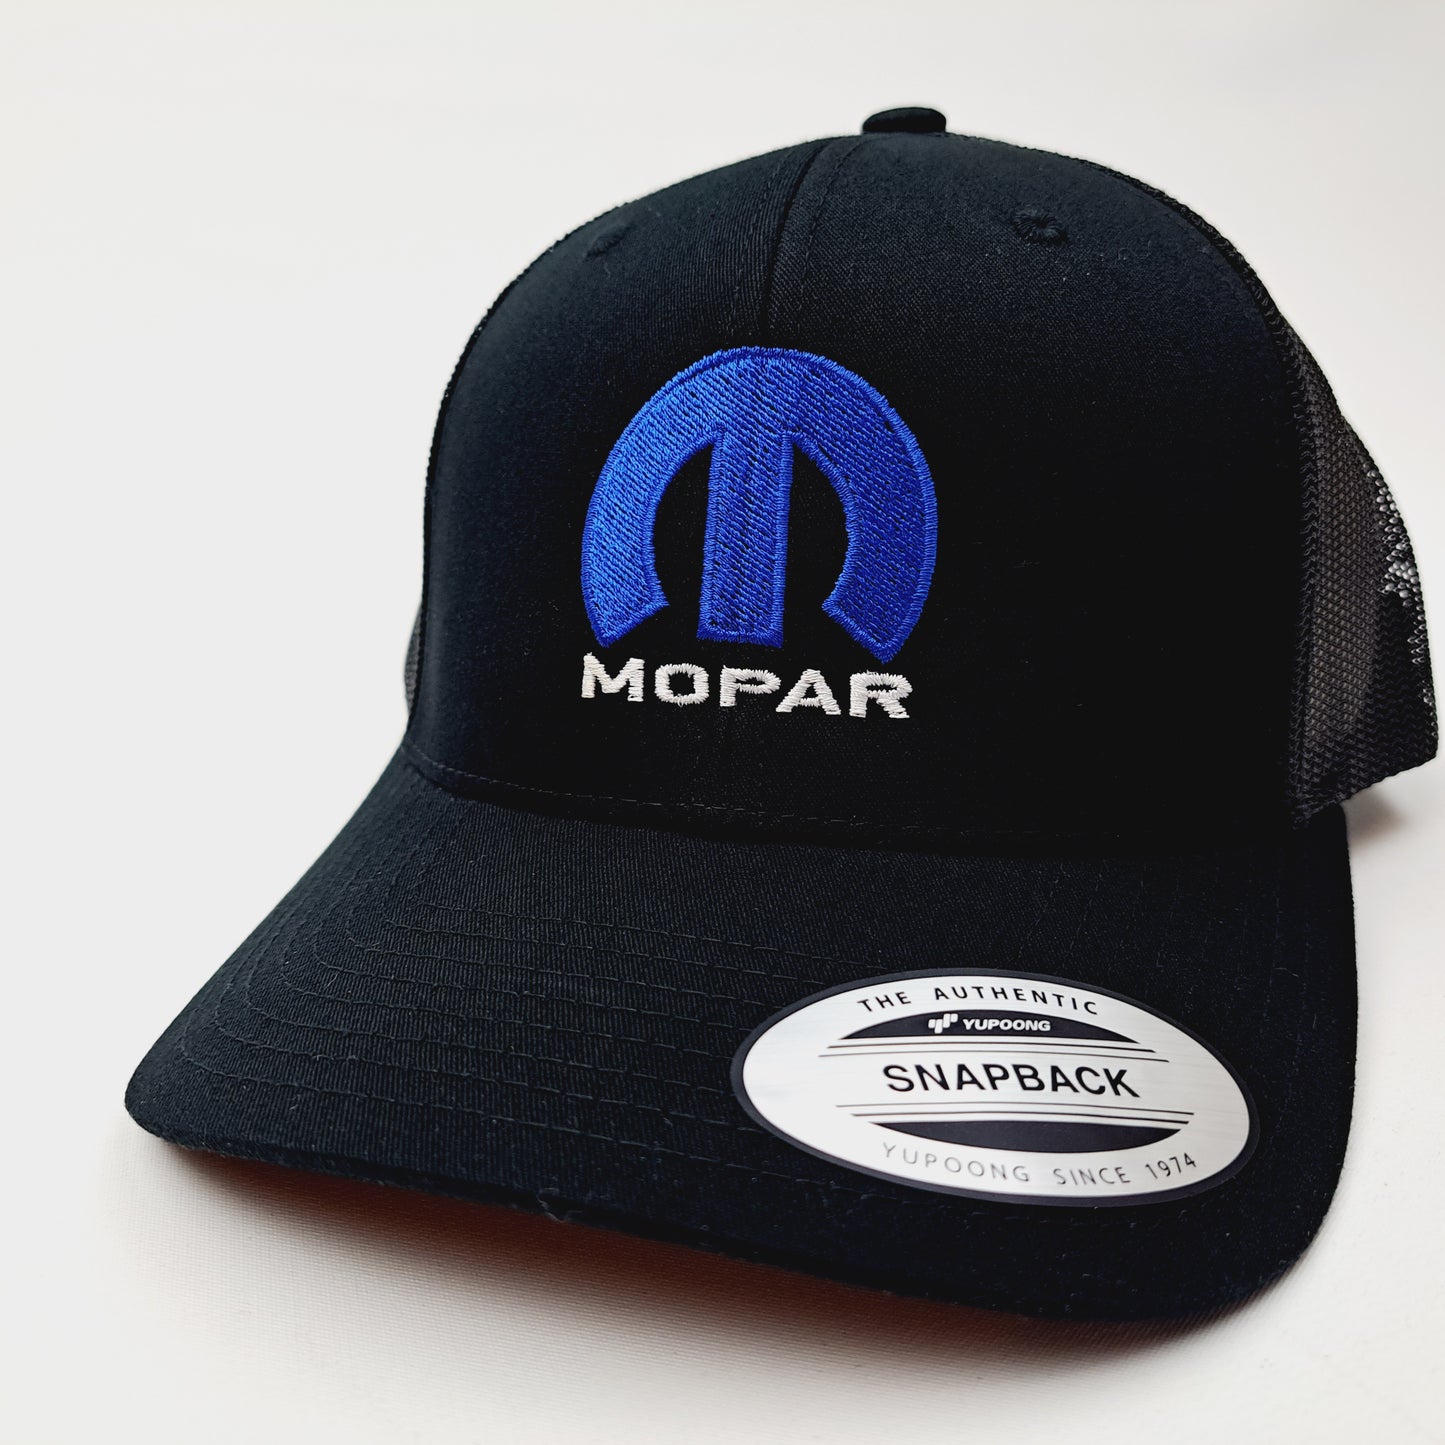 Mopar Curved Bill Low Profile Trucker Mesh Snapback Cap Hat Black